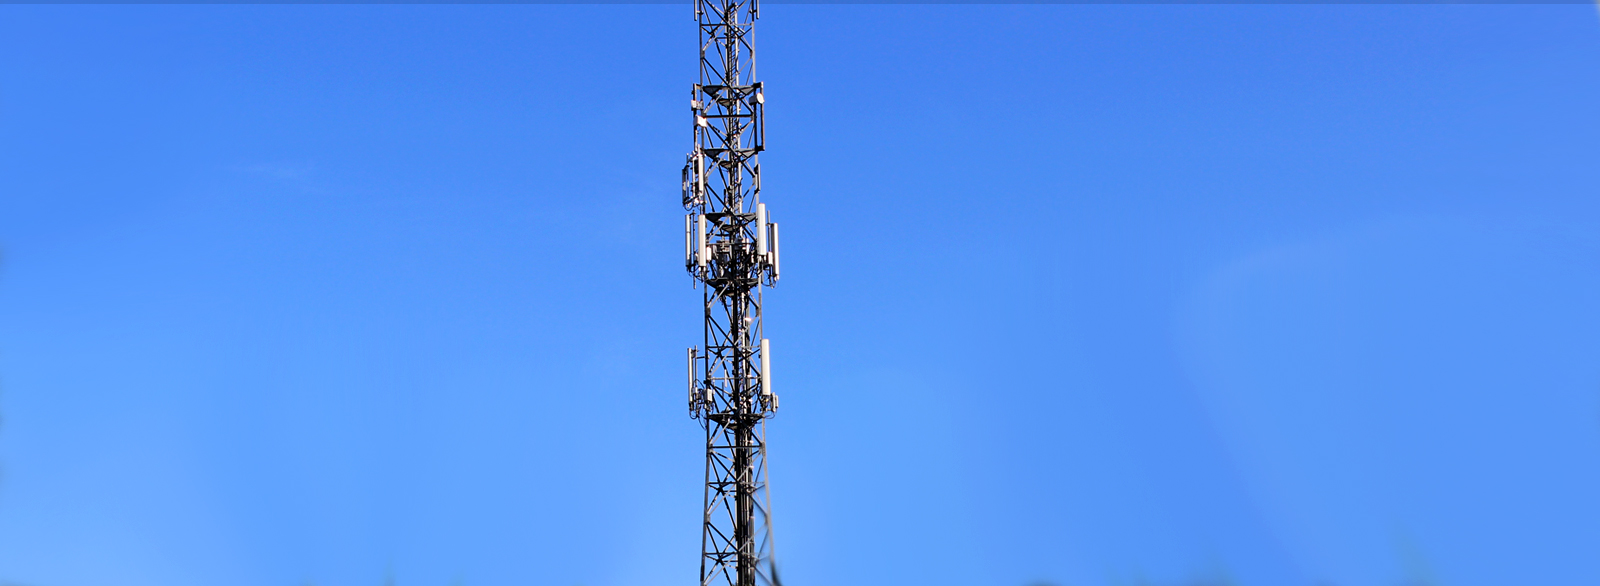 Antena telekomunikacyjna